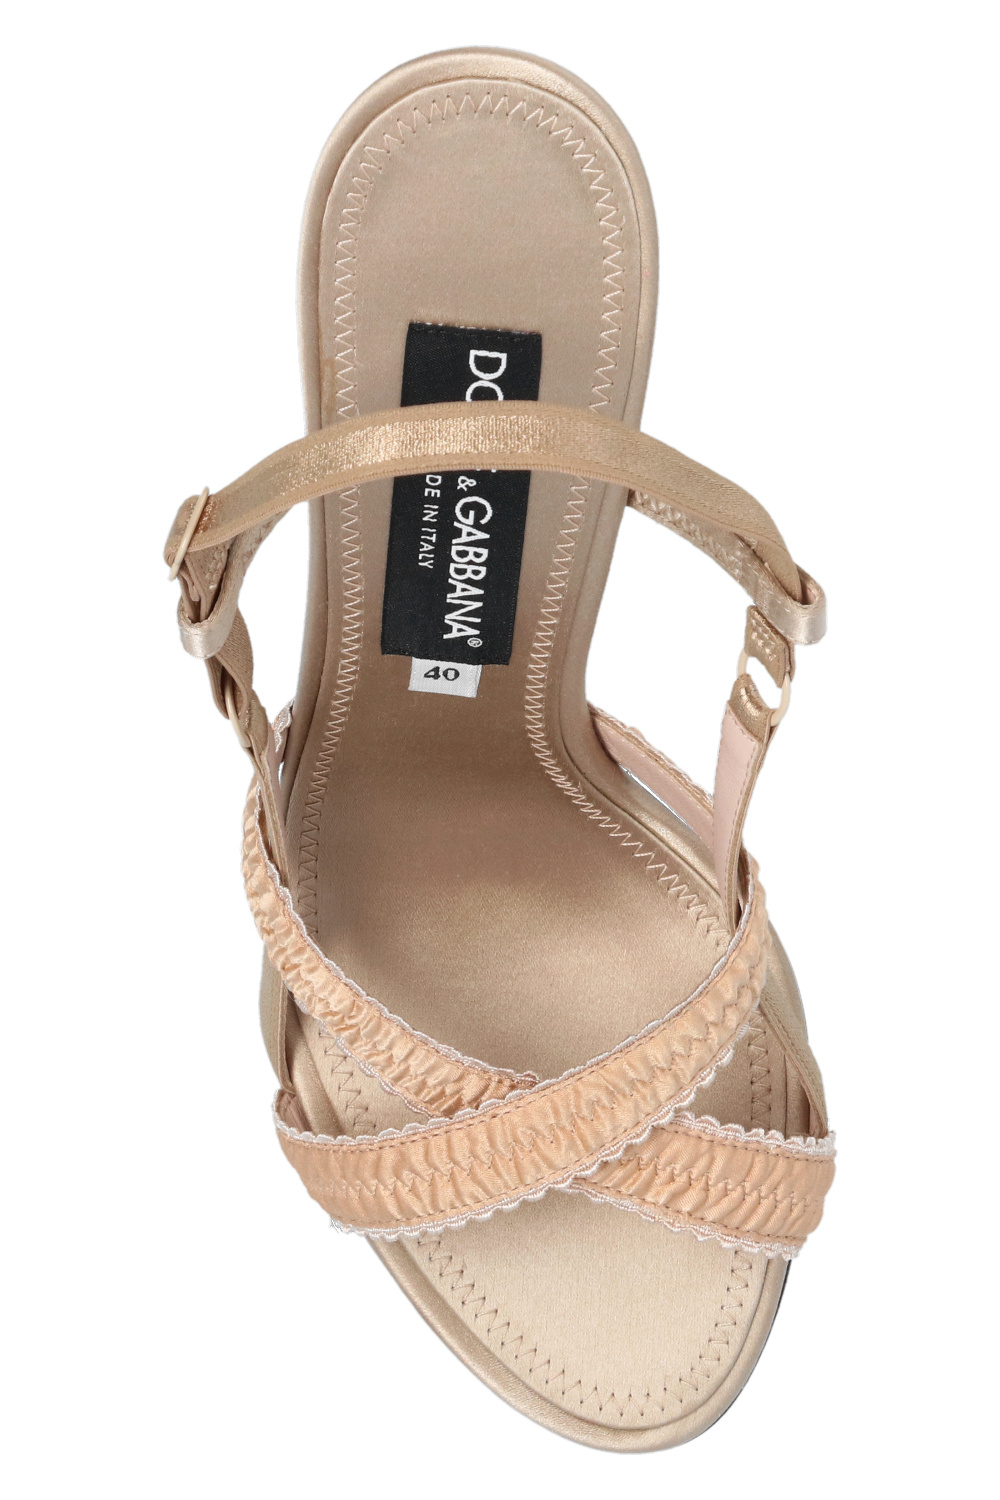 Dolce & Gabbana crown print scarf ‘Keira’ heeled sandals